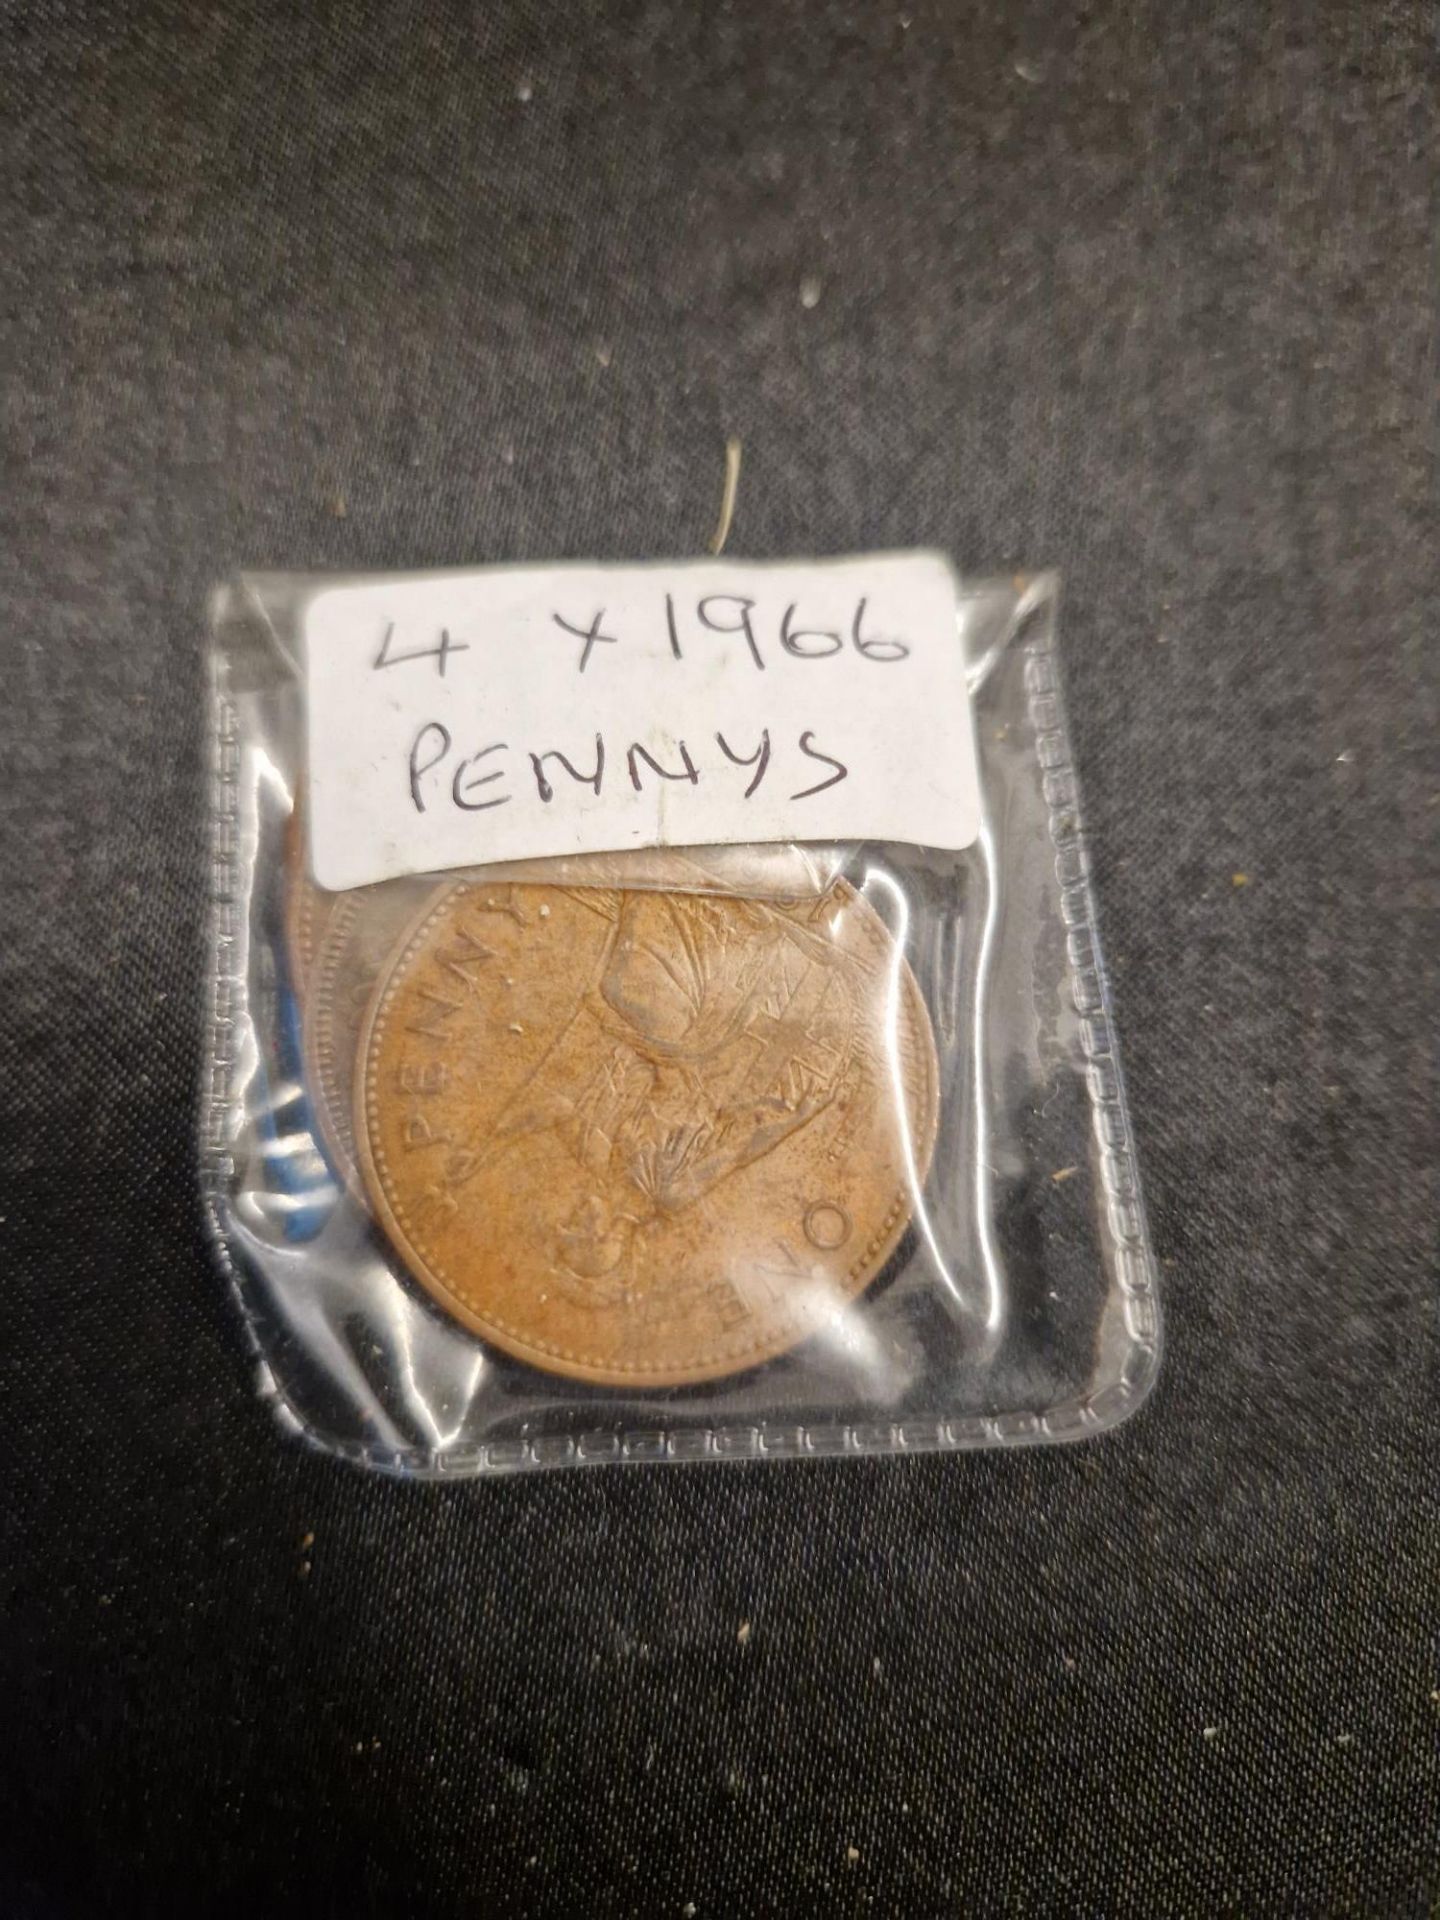 4 x 1966 pennys